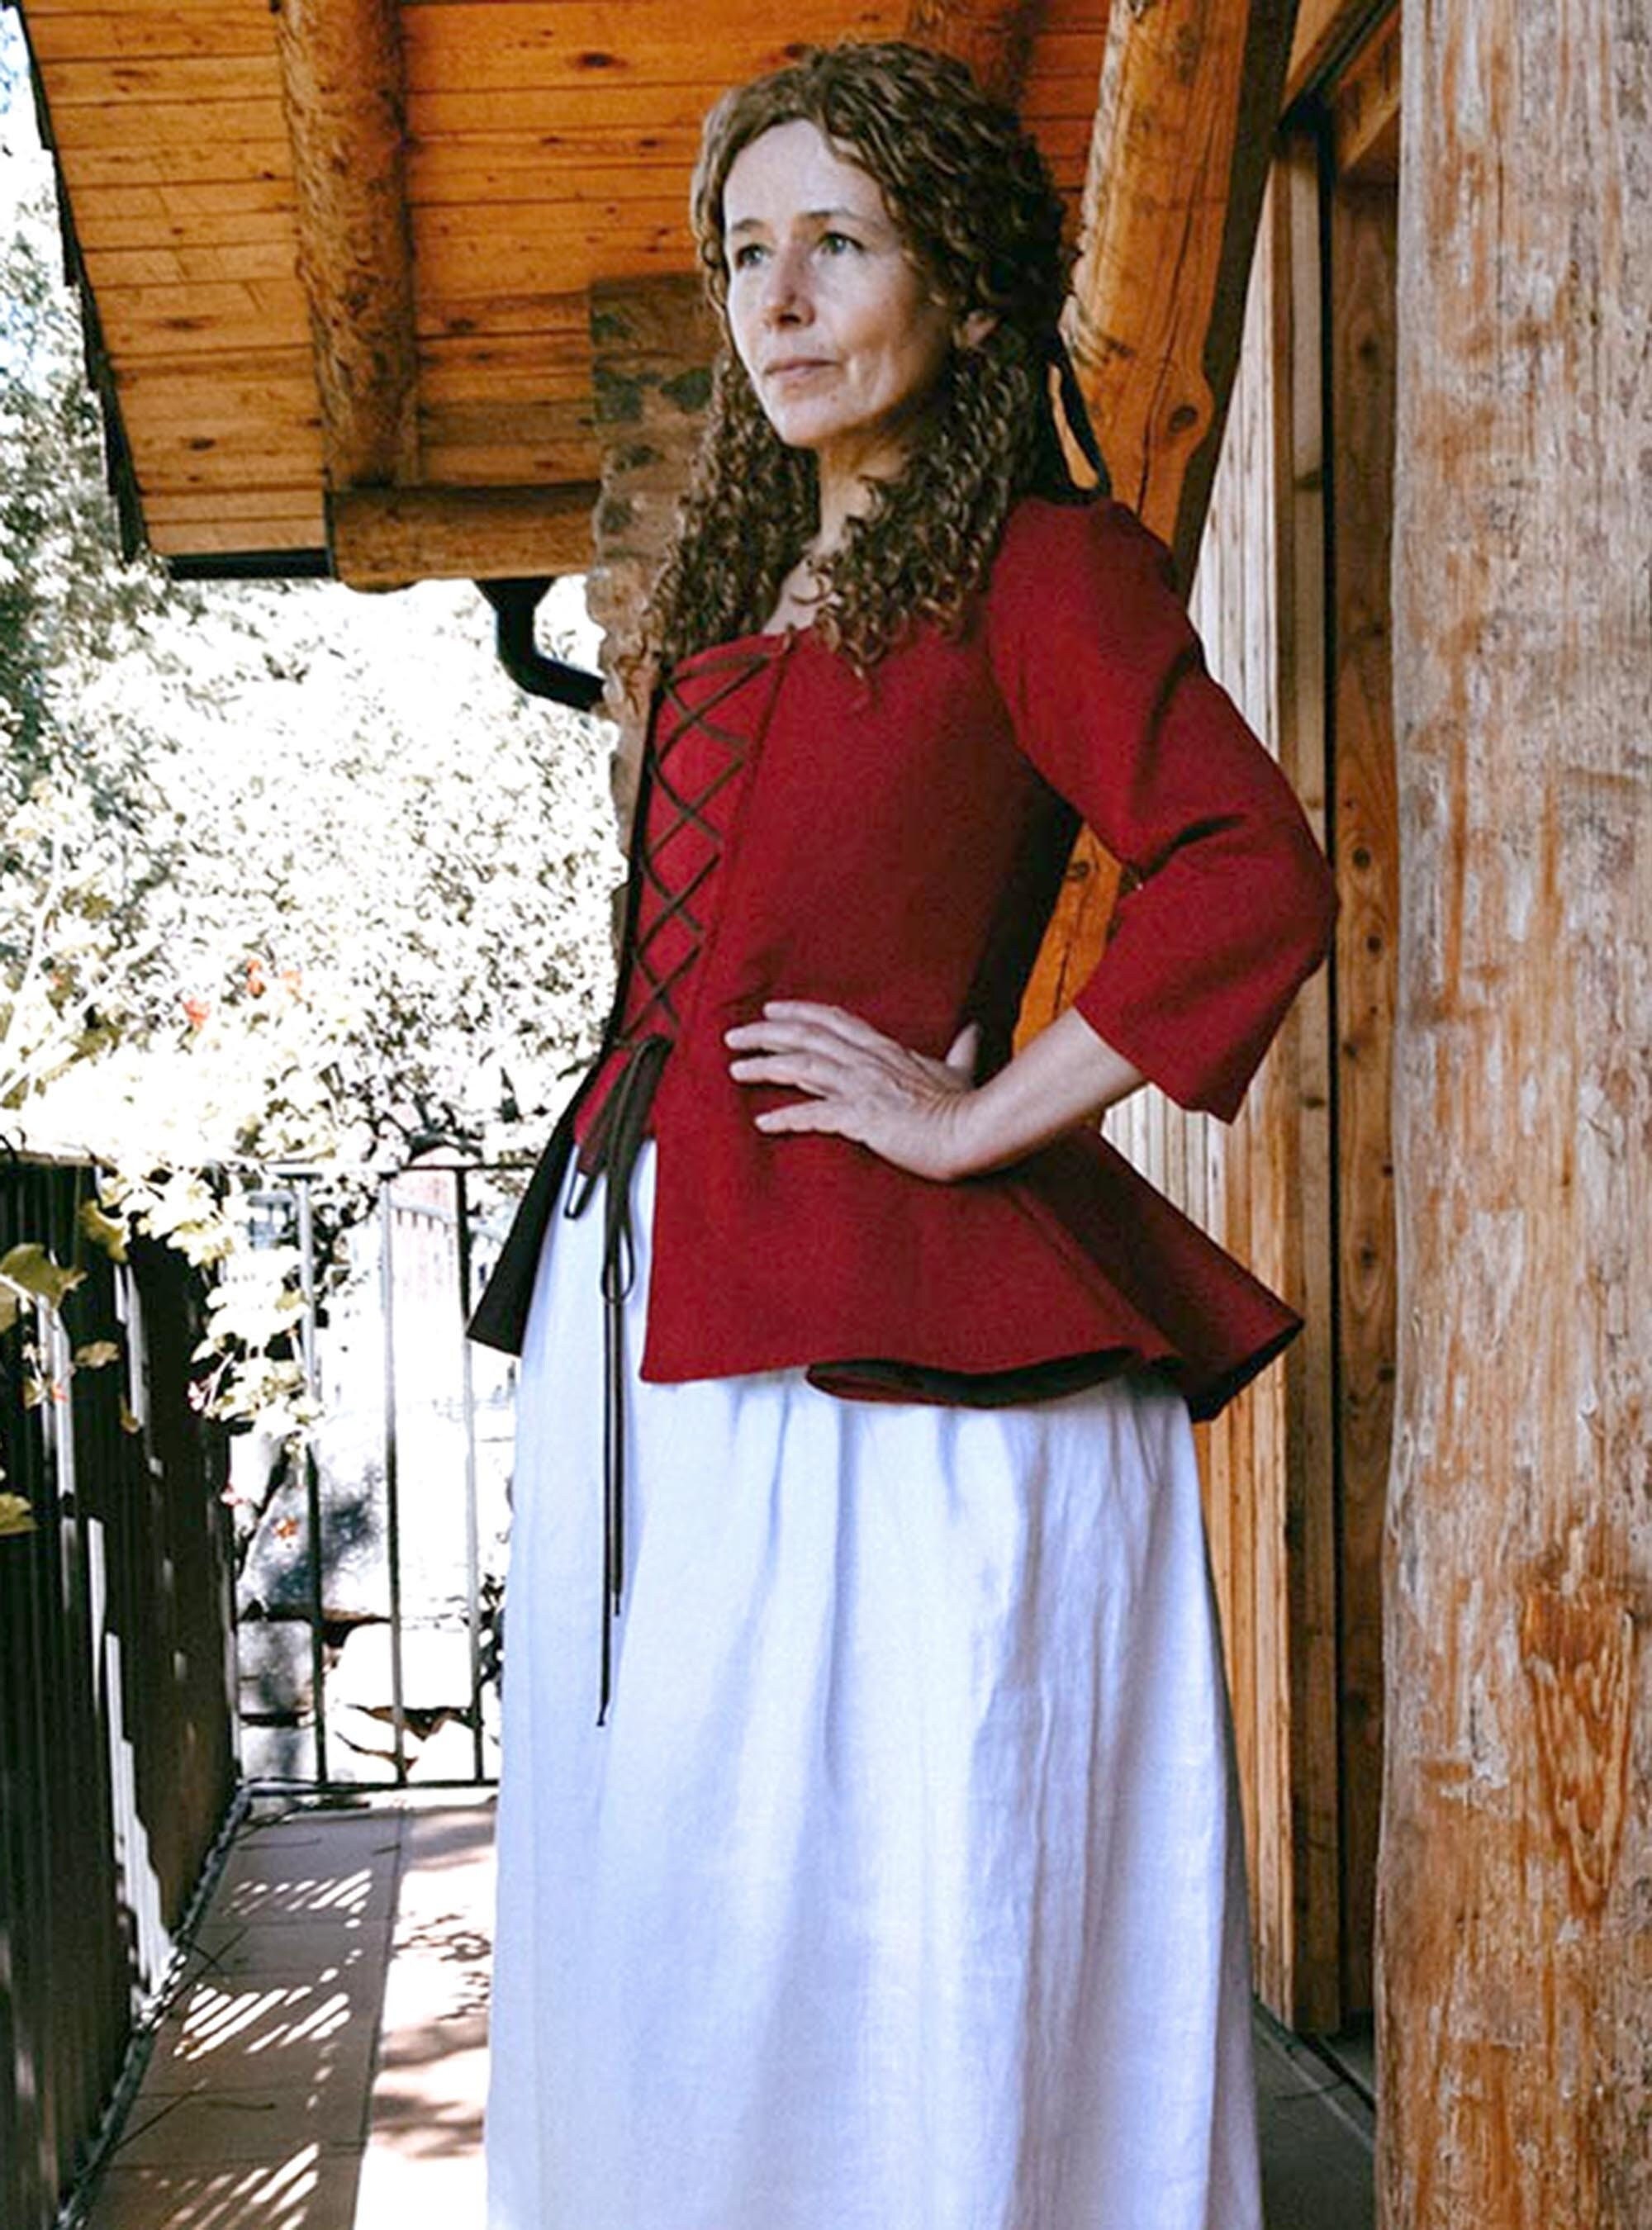 FITTED LINEN JACKET Peplum Jacket in Cherry Red Linen, Vintage Clothing,  Renaissance Bodice -  Sweden